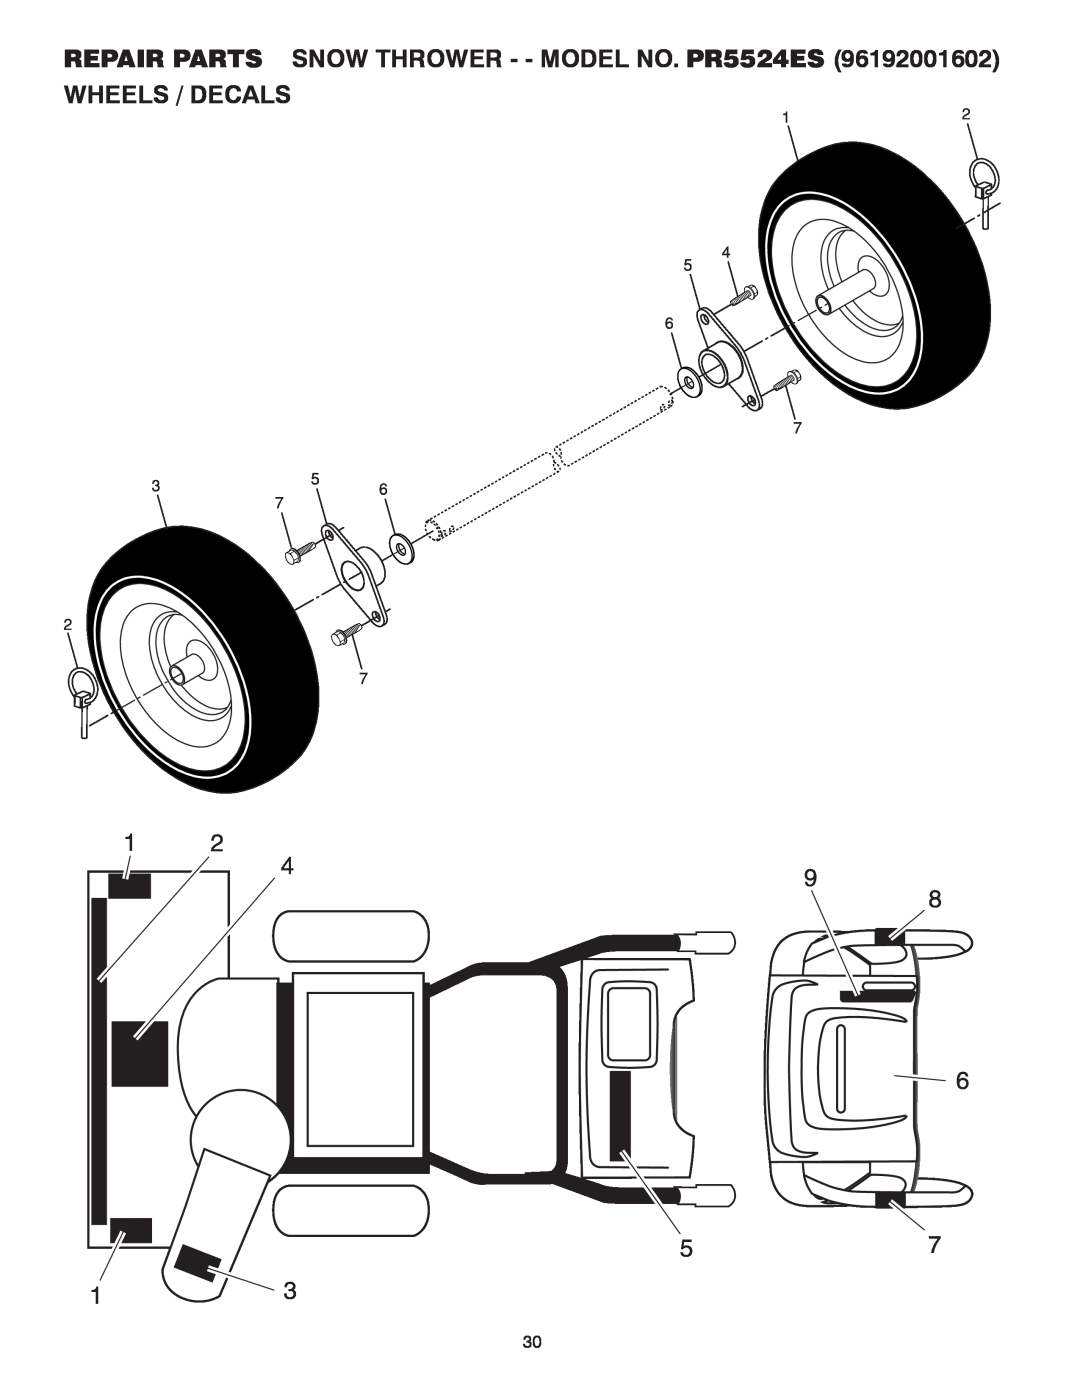 Poulan 416829 owner manual Wheels / Decals, REPAIR PARTS SNOW THROWER - - MODEL NO. PR5524ES 